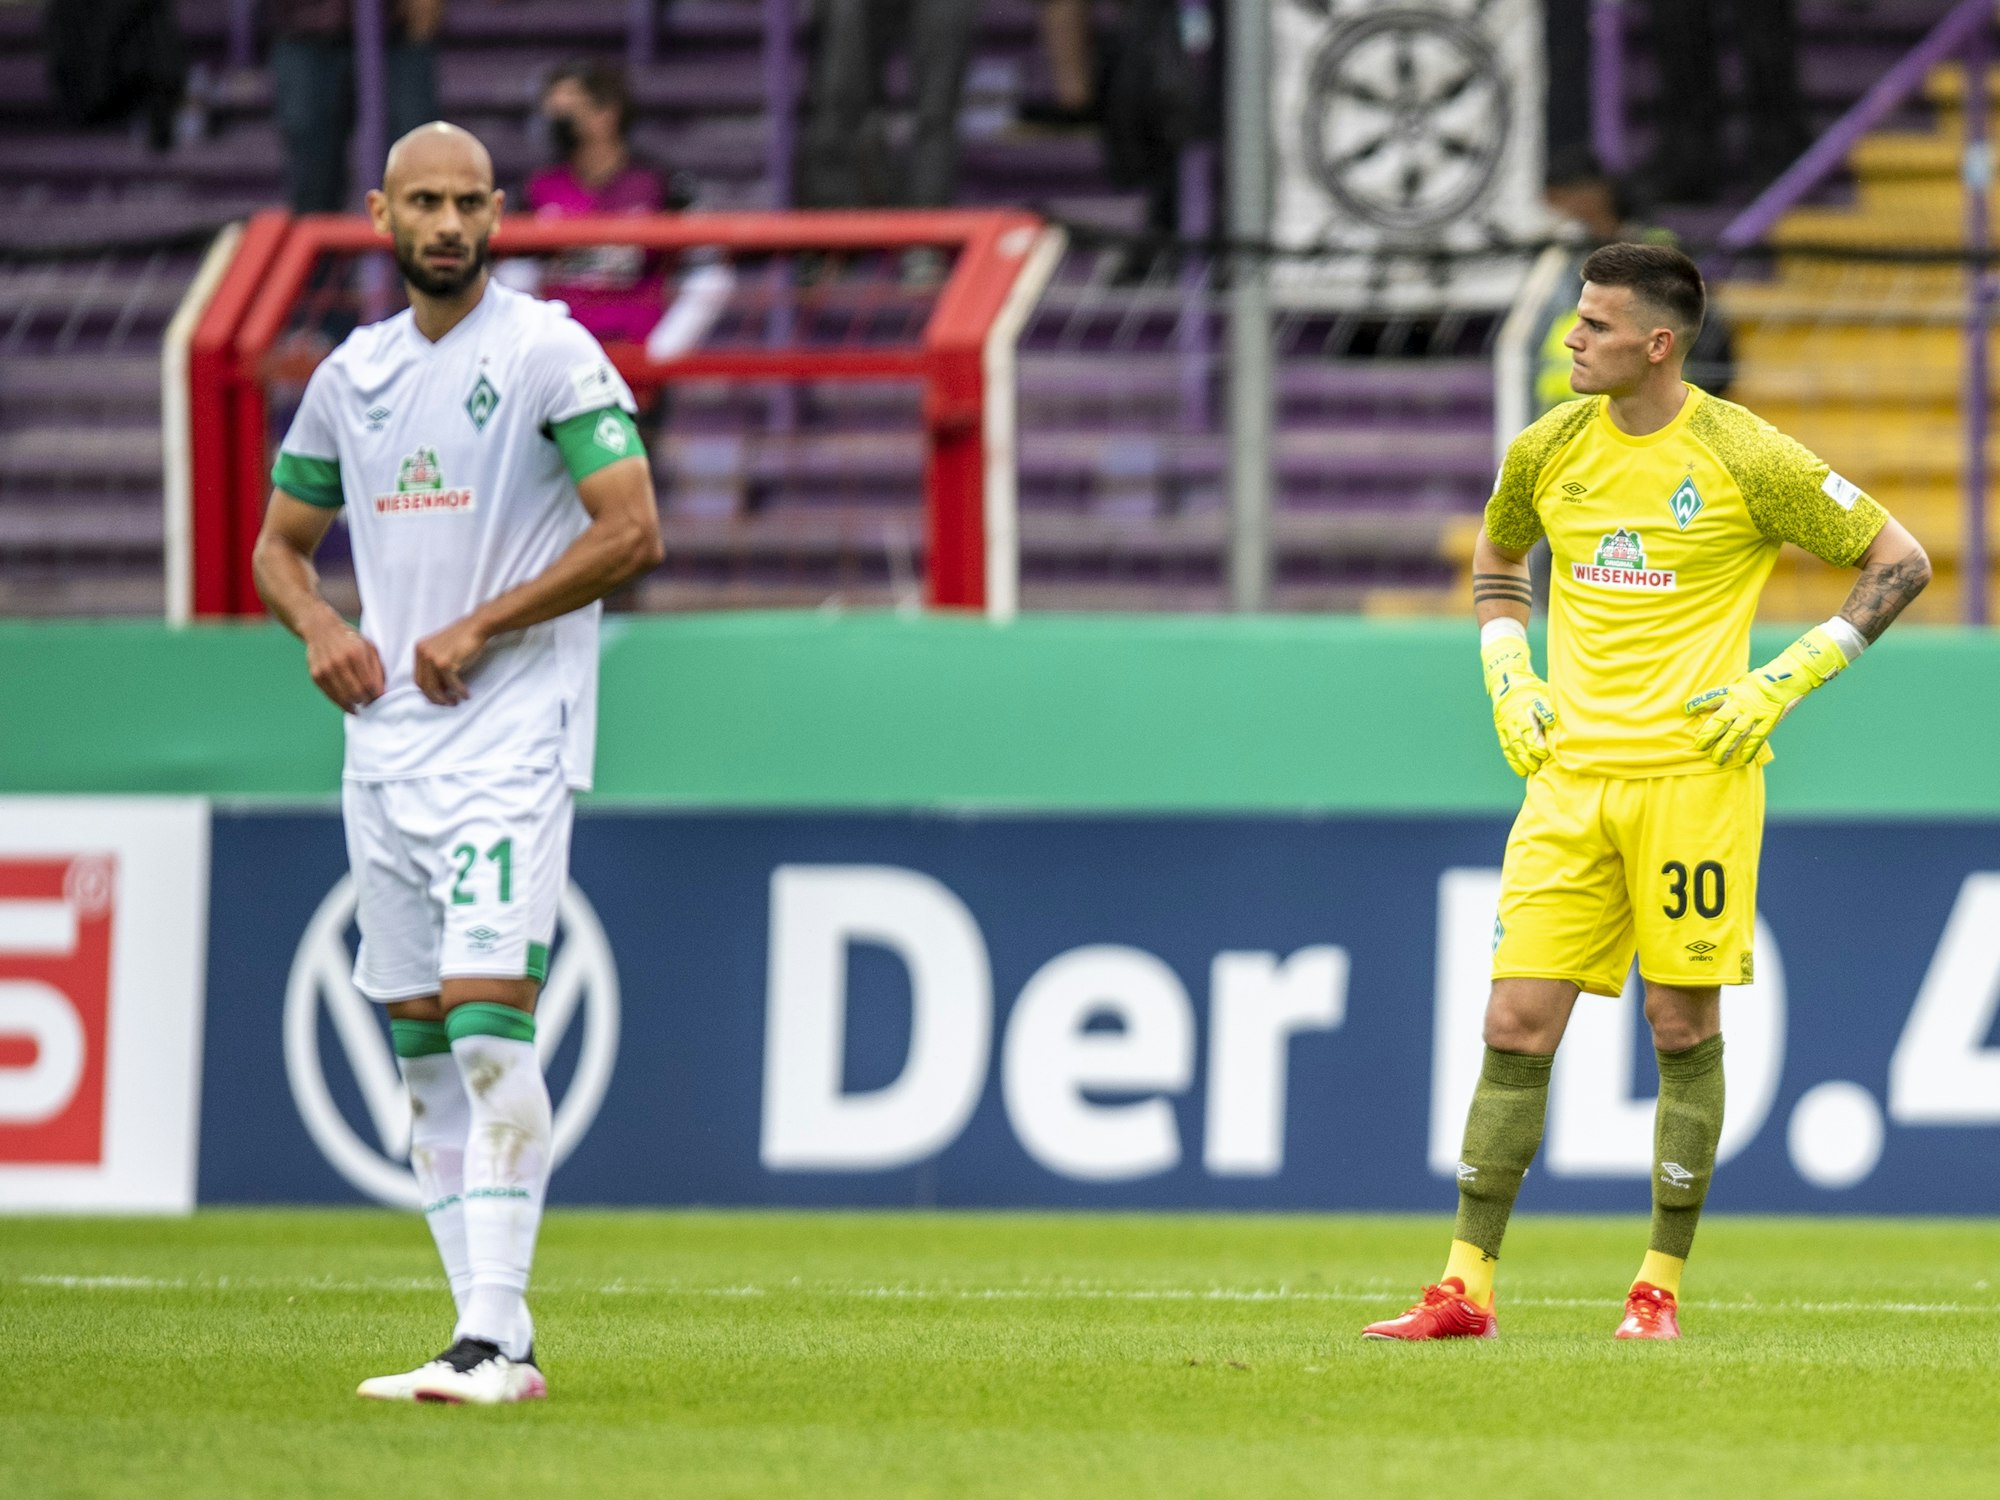 Bremens Ömer Toprak und Torwart Michael Zetterer reagieren nach dem Gegentor im DFB-Pokal gegen den VfL Osnabrück.